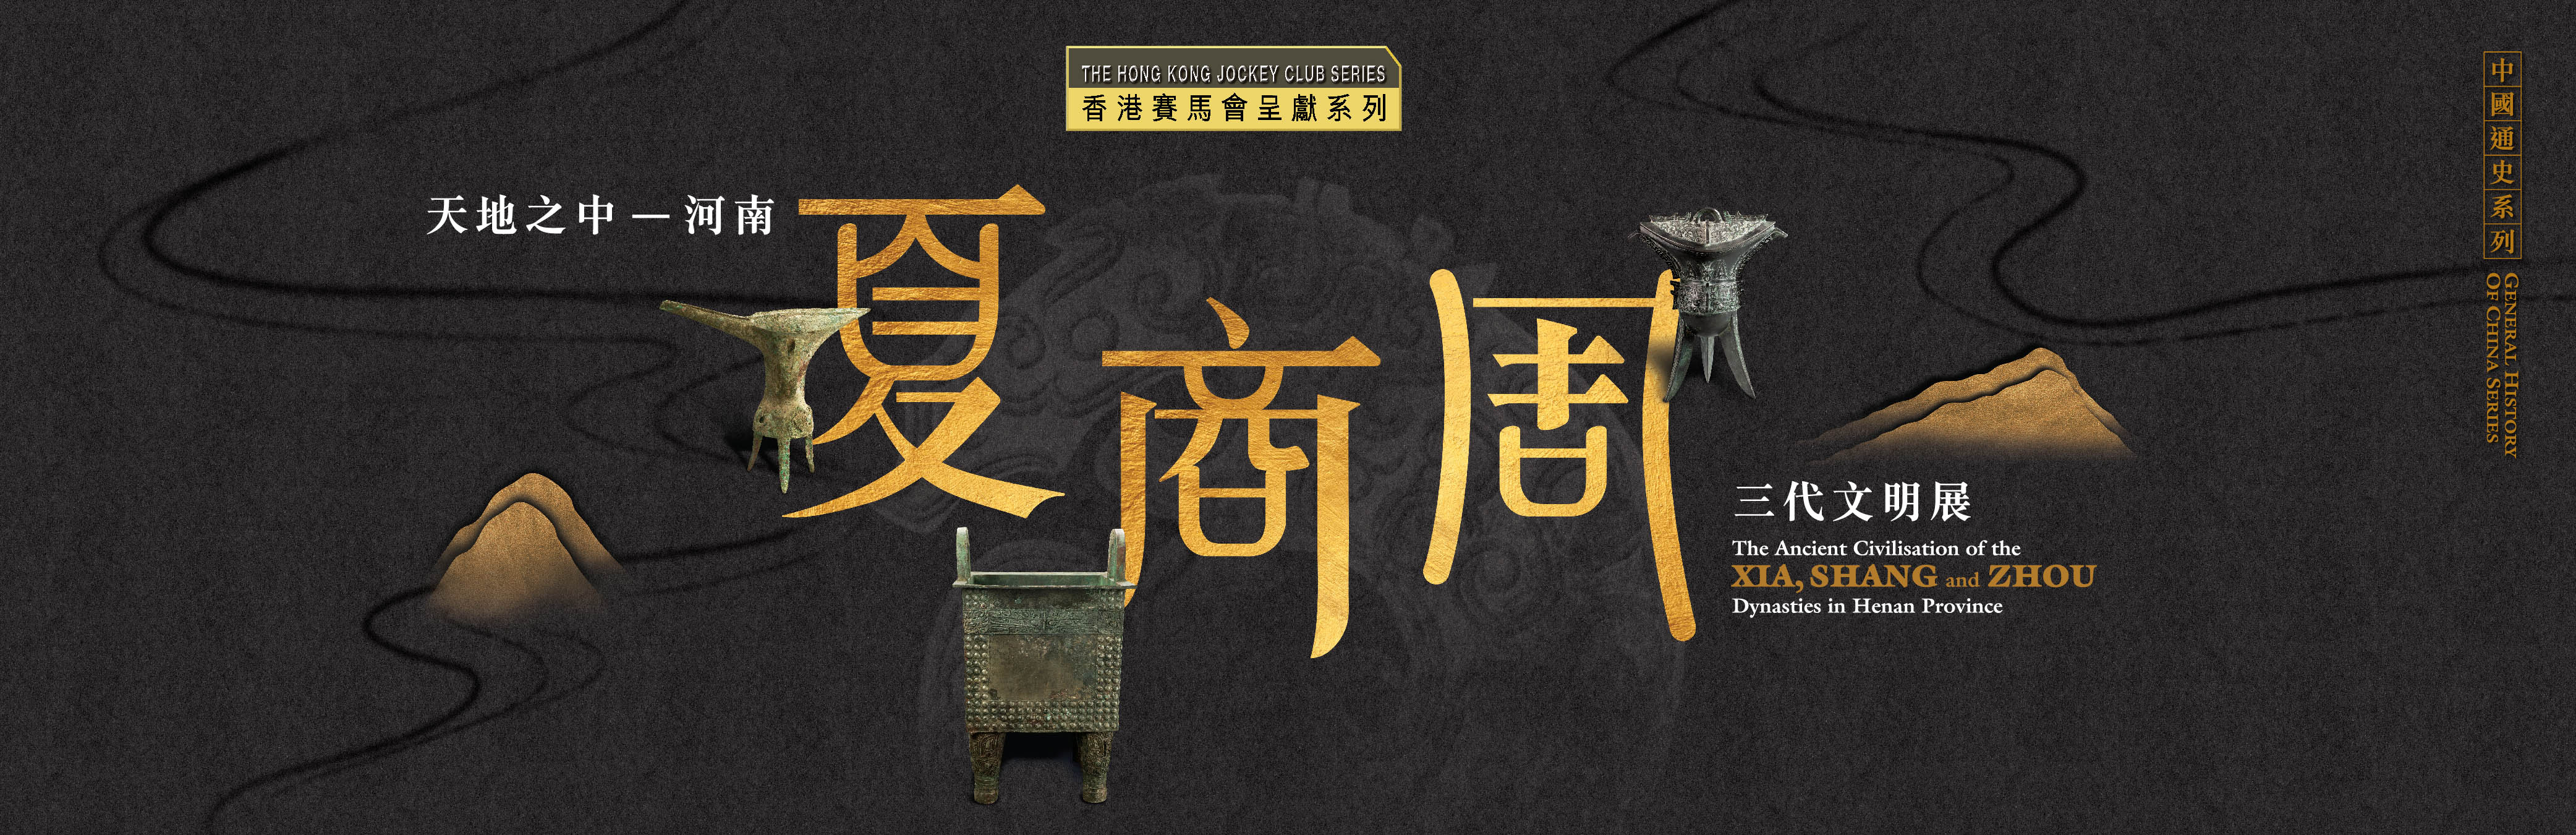 Banner of The Hong Kong Jockey Club Series: The Ancient Civilisation of the Xia, Shang and Zhou Dynasties in Henan Province